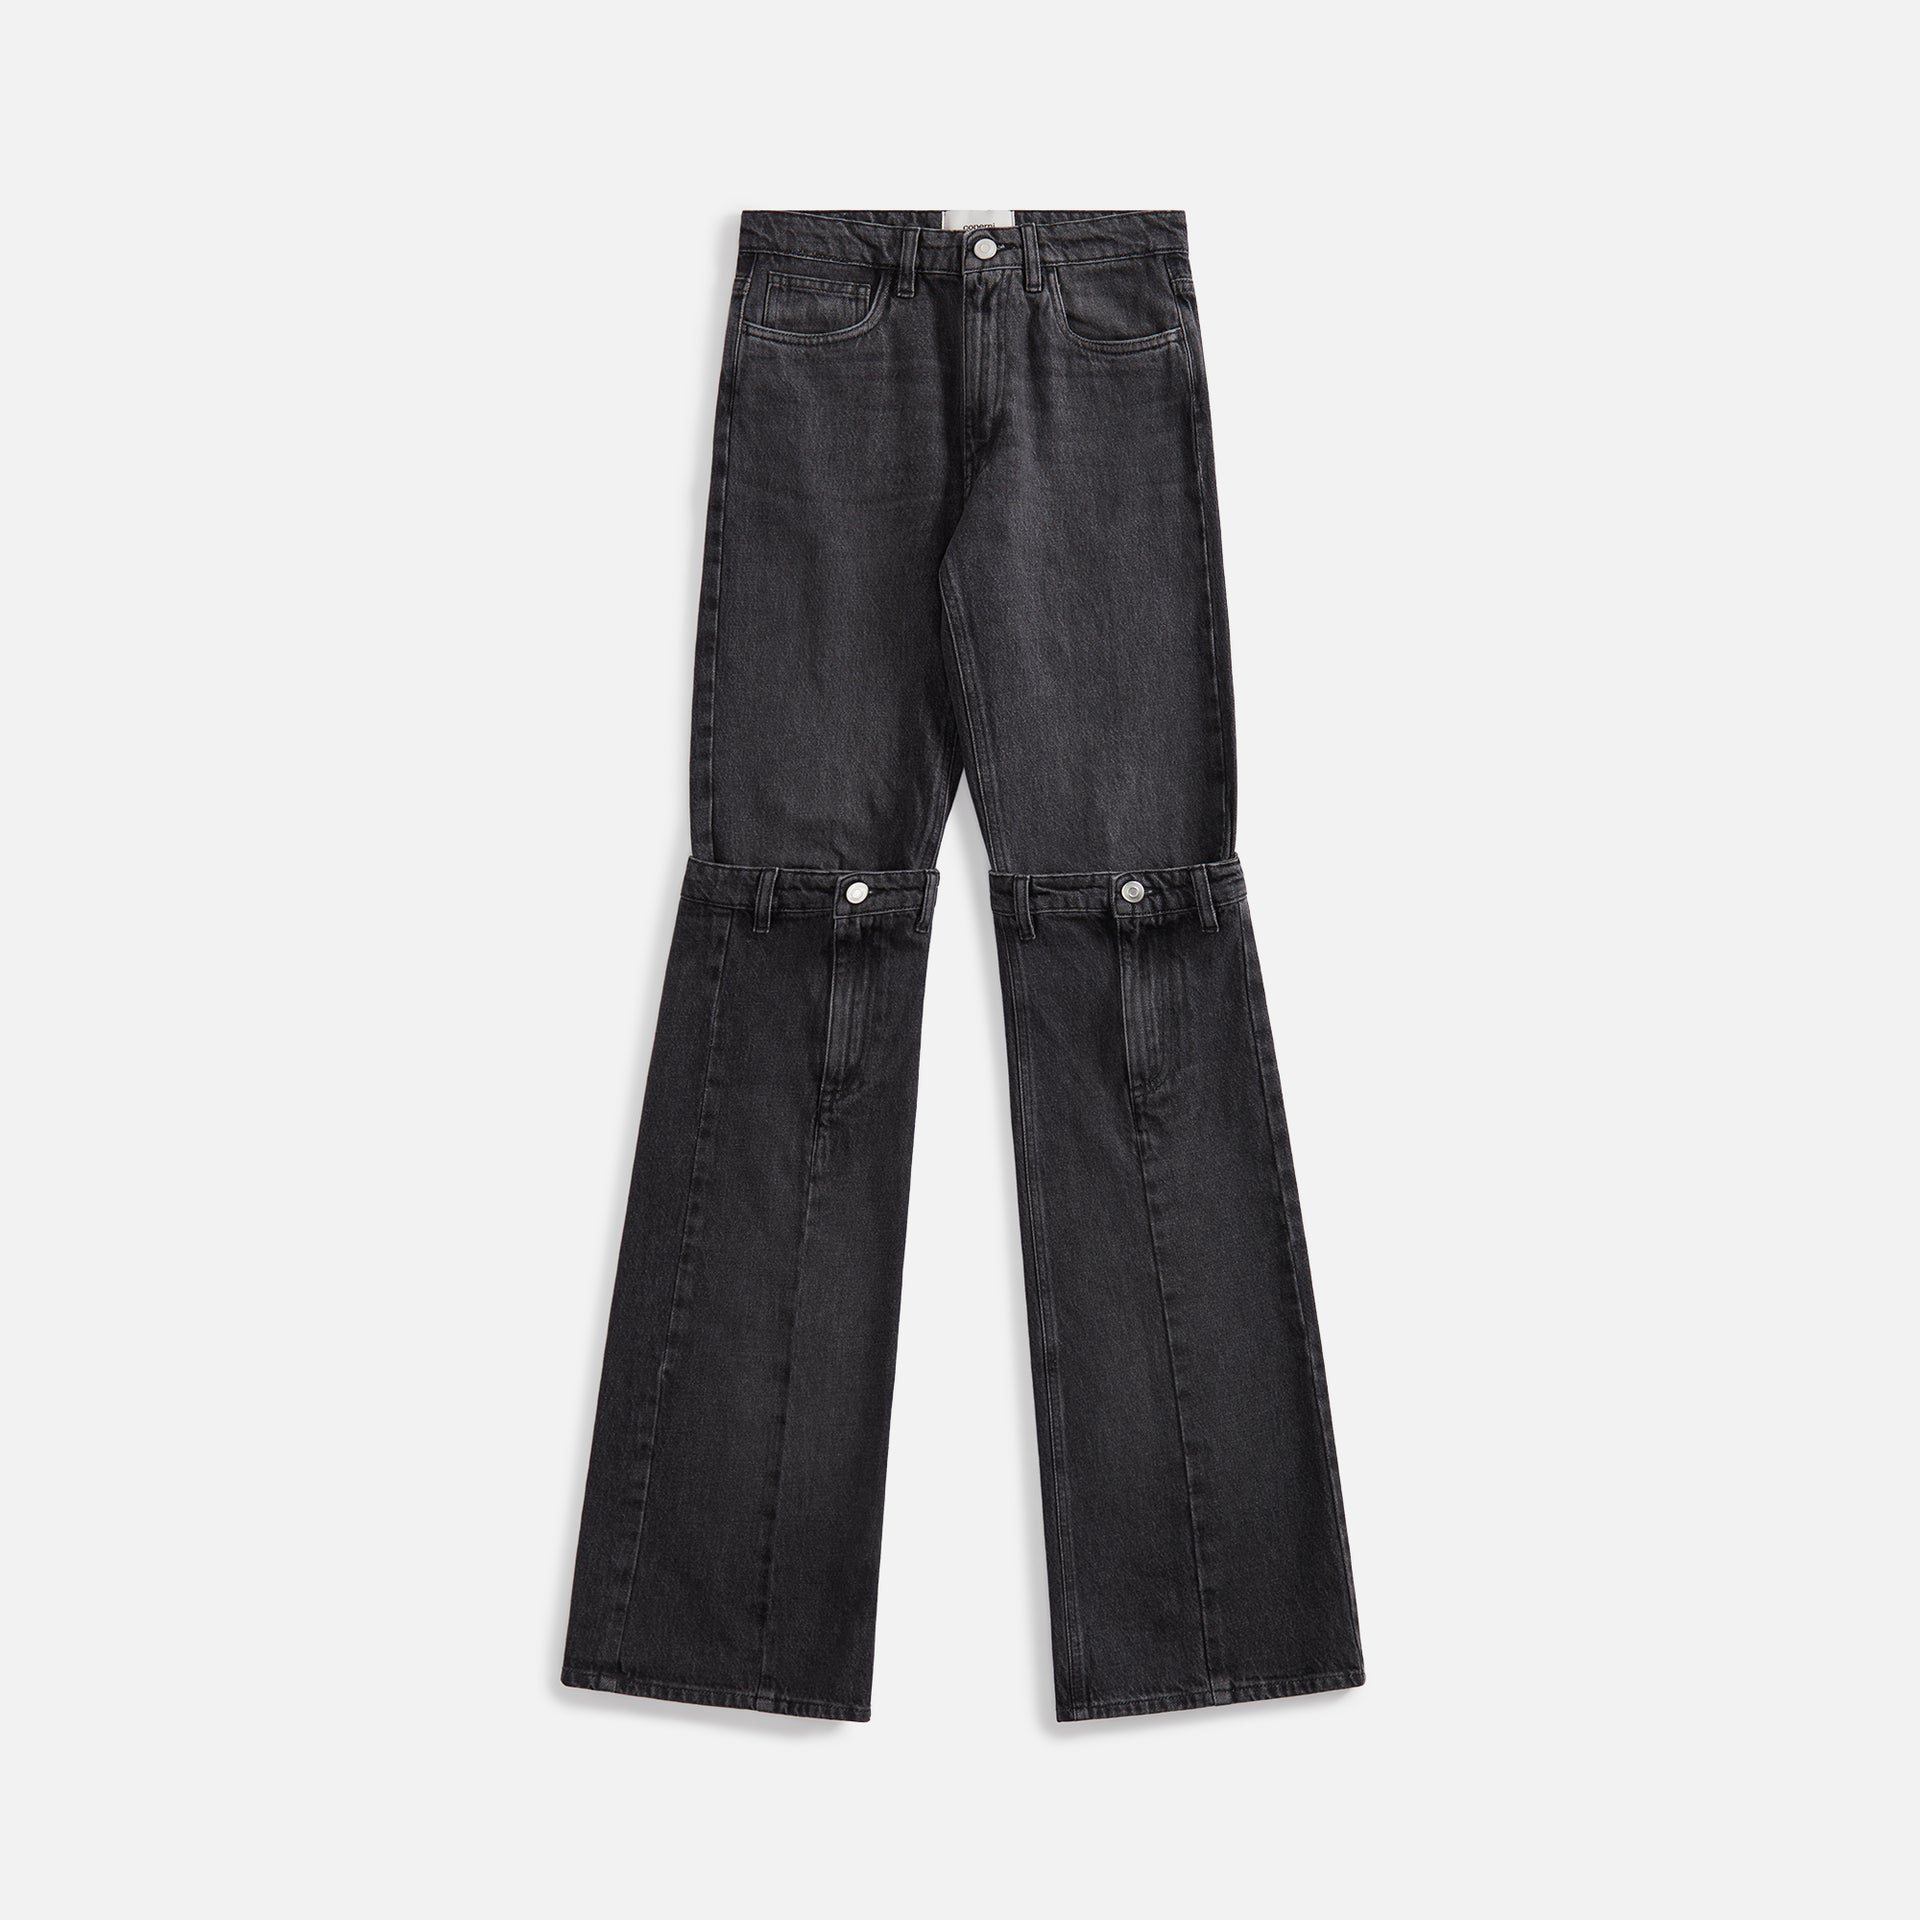 Coperni Open Knee chiaro Jeans - Washed Black